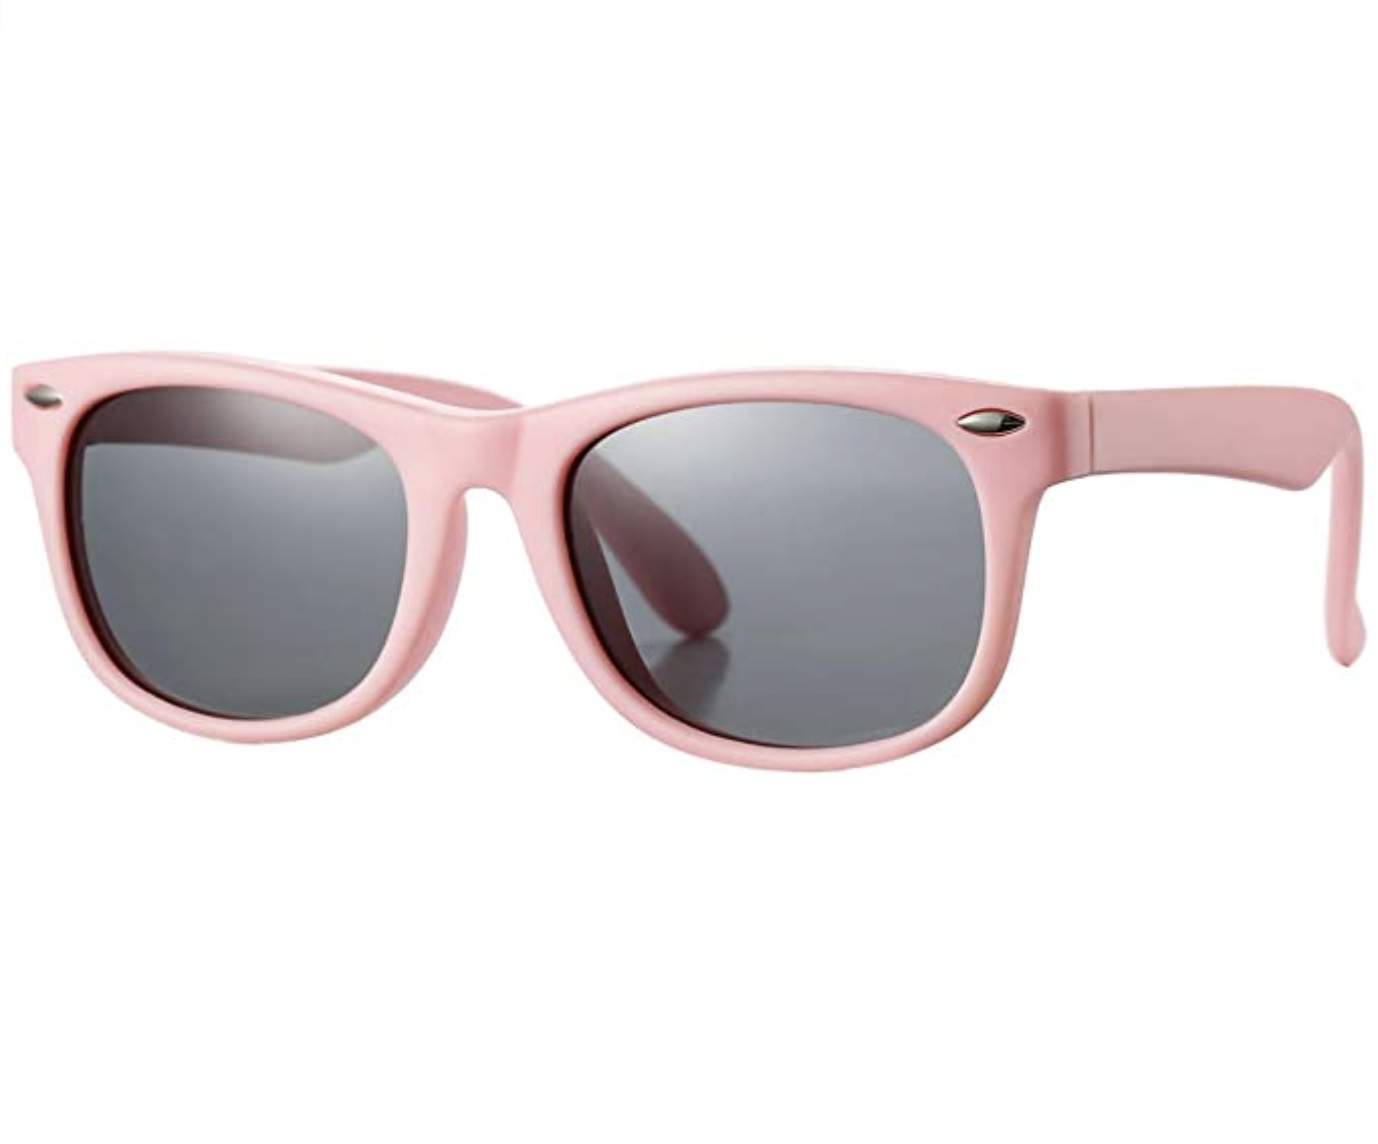 COASION TPEE Soft Silicone Polarized Sunglasses For Kids